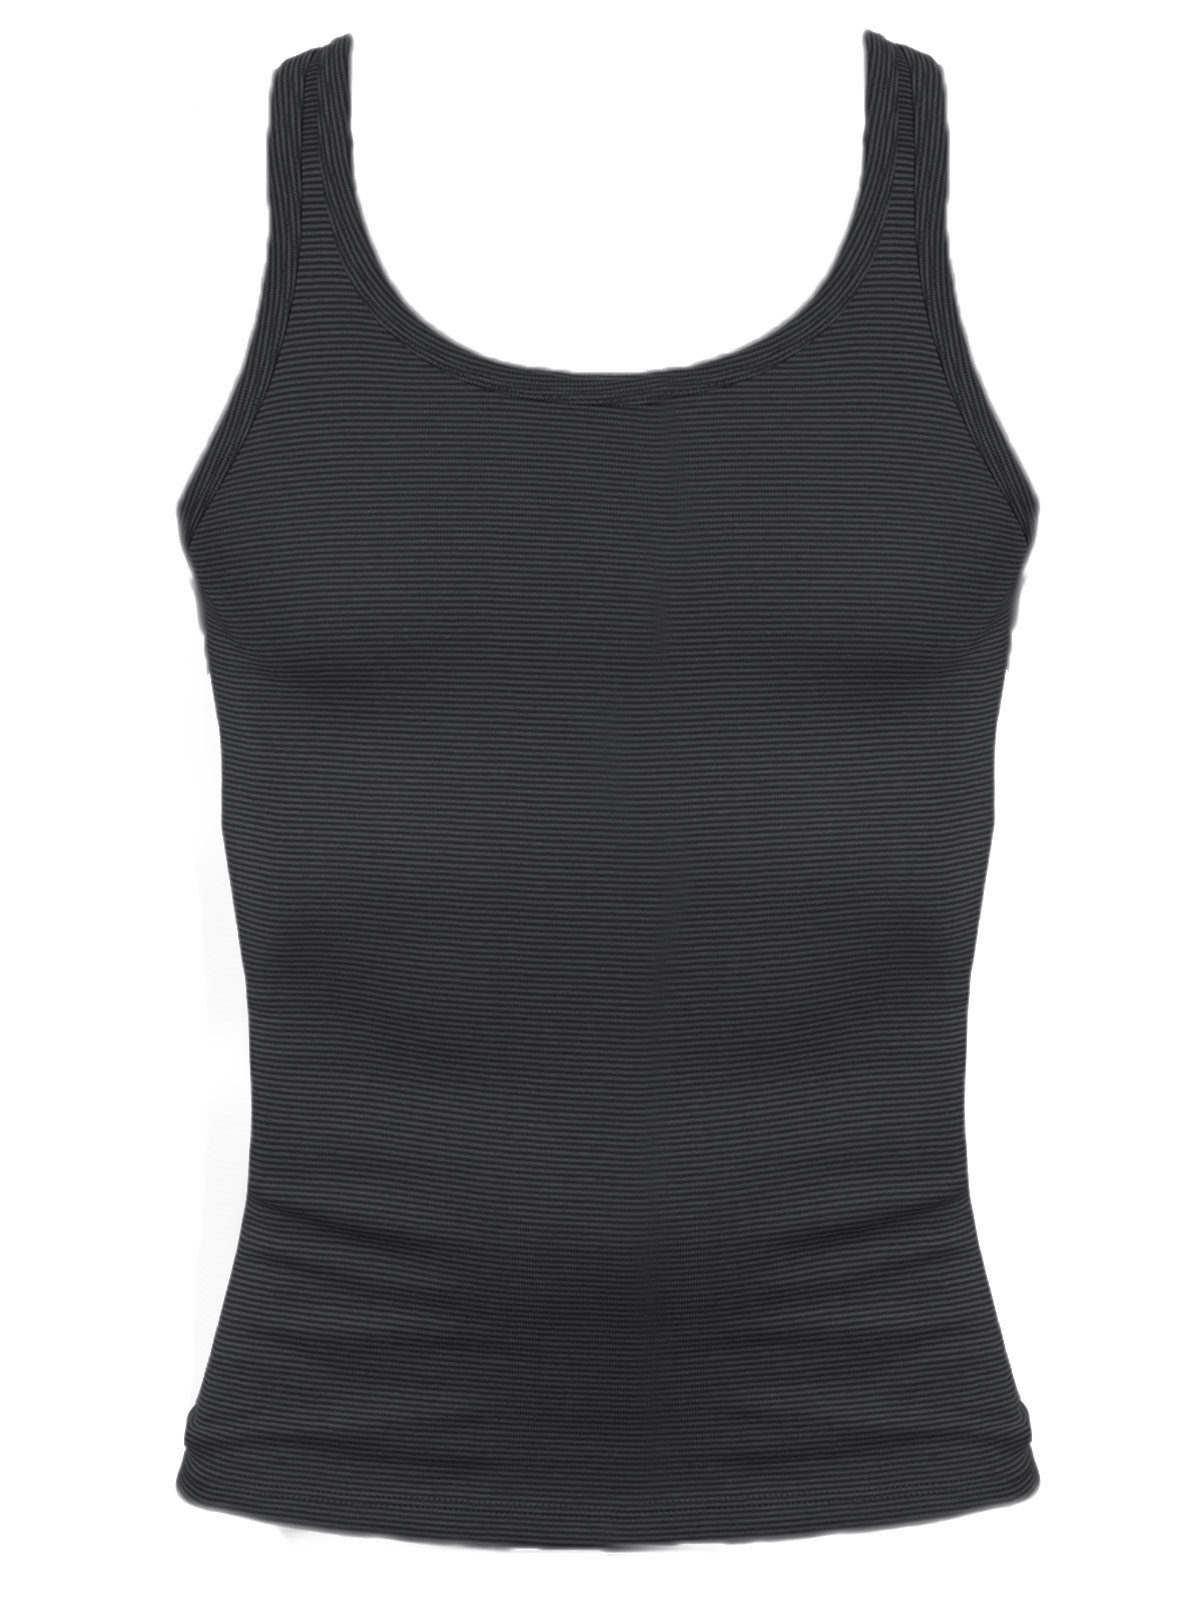 Materialmix Unterhemd Herren 1-St) schwarz Klimafit KUMPF (Stück, Achselhemd